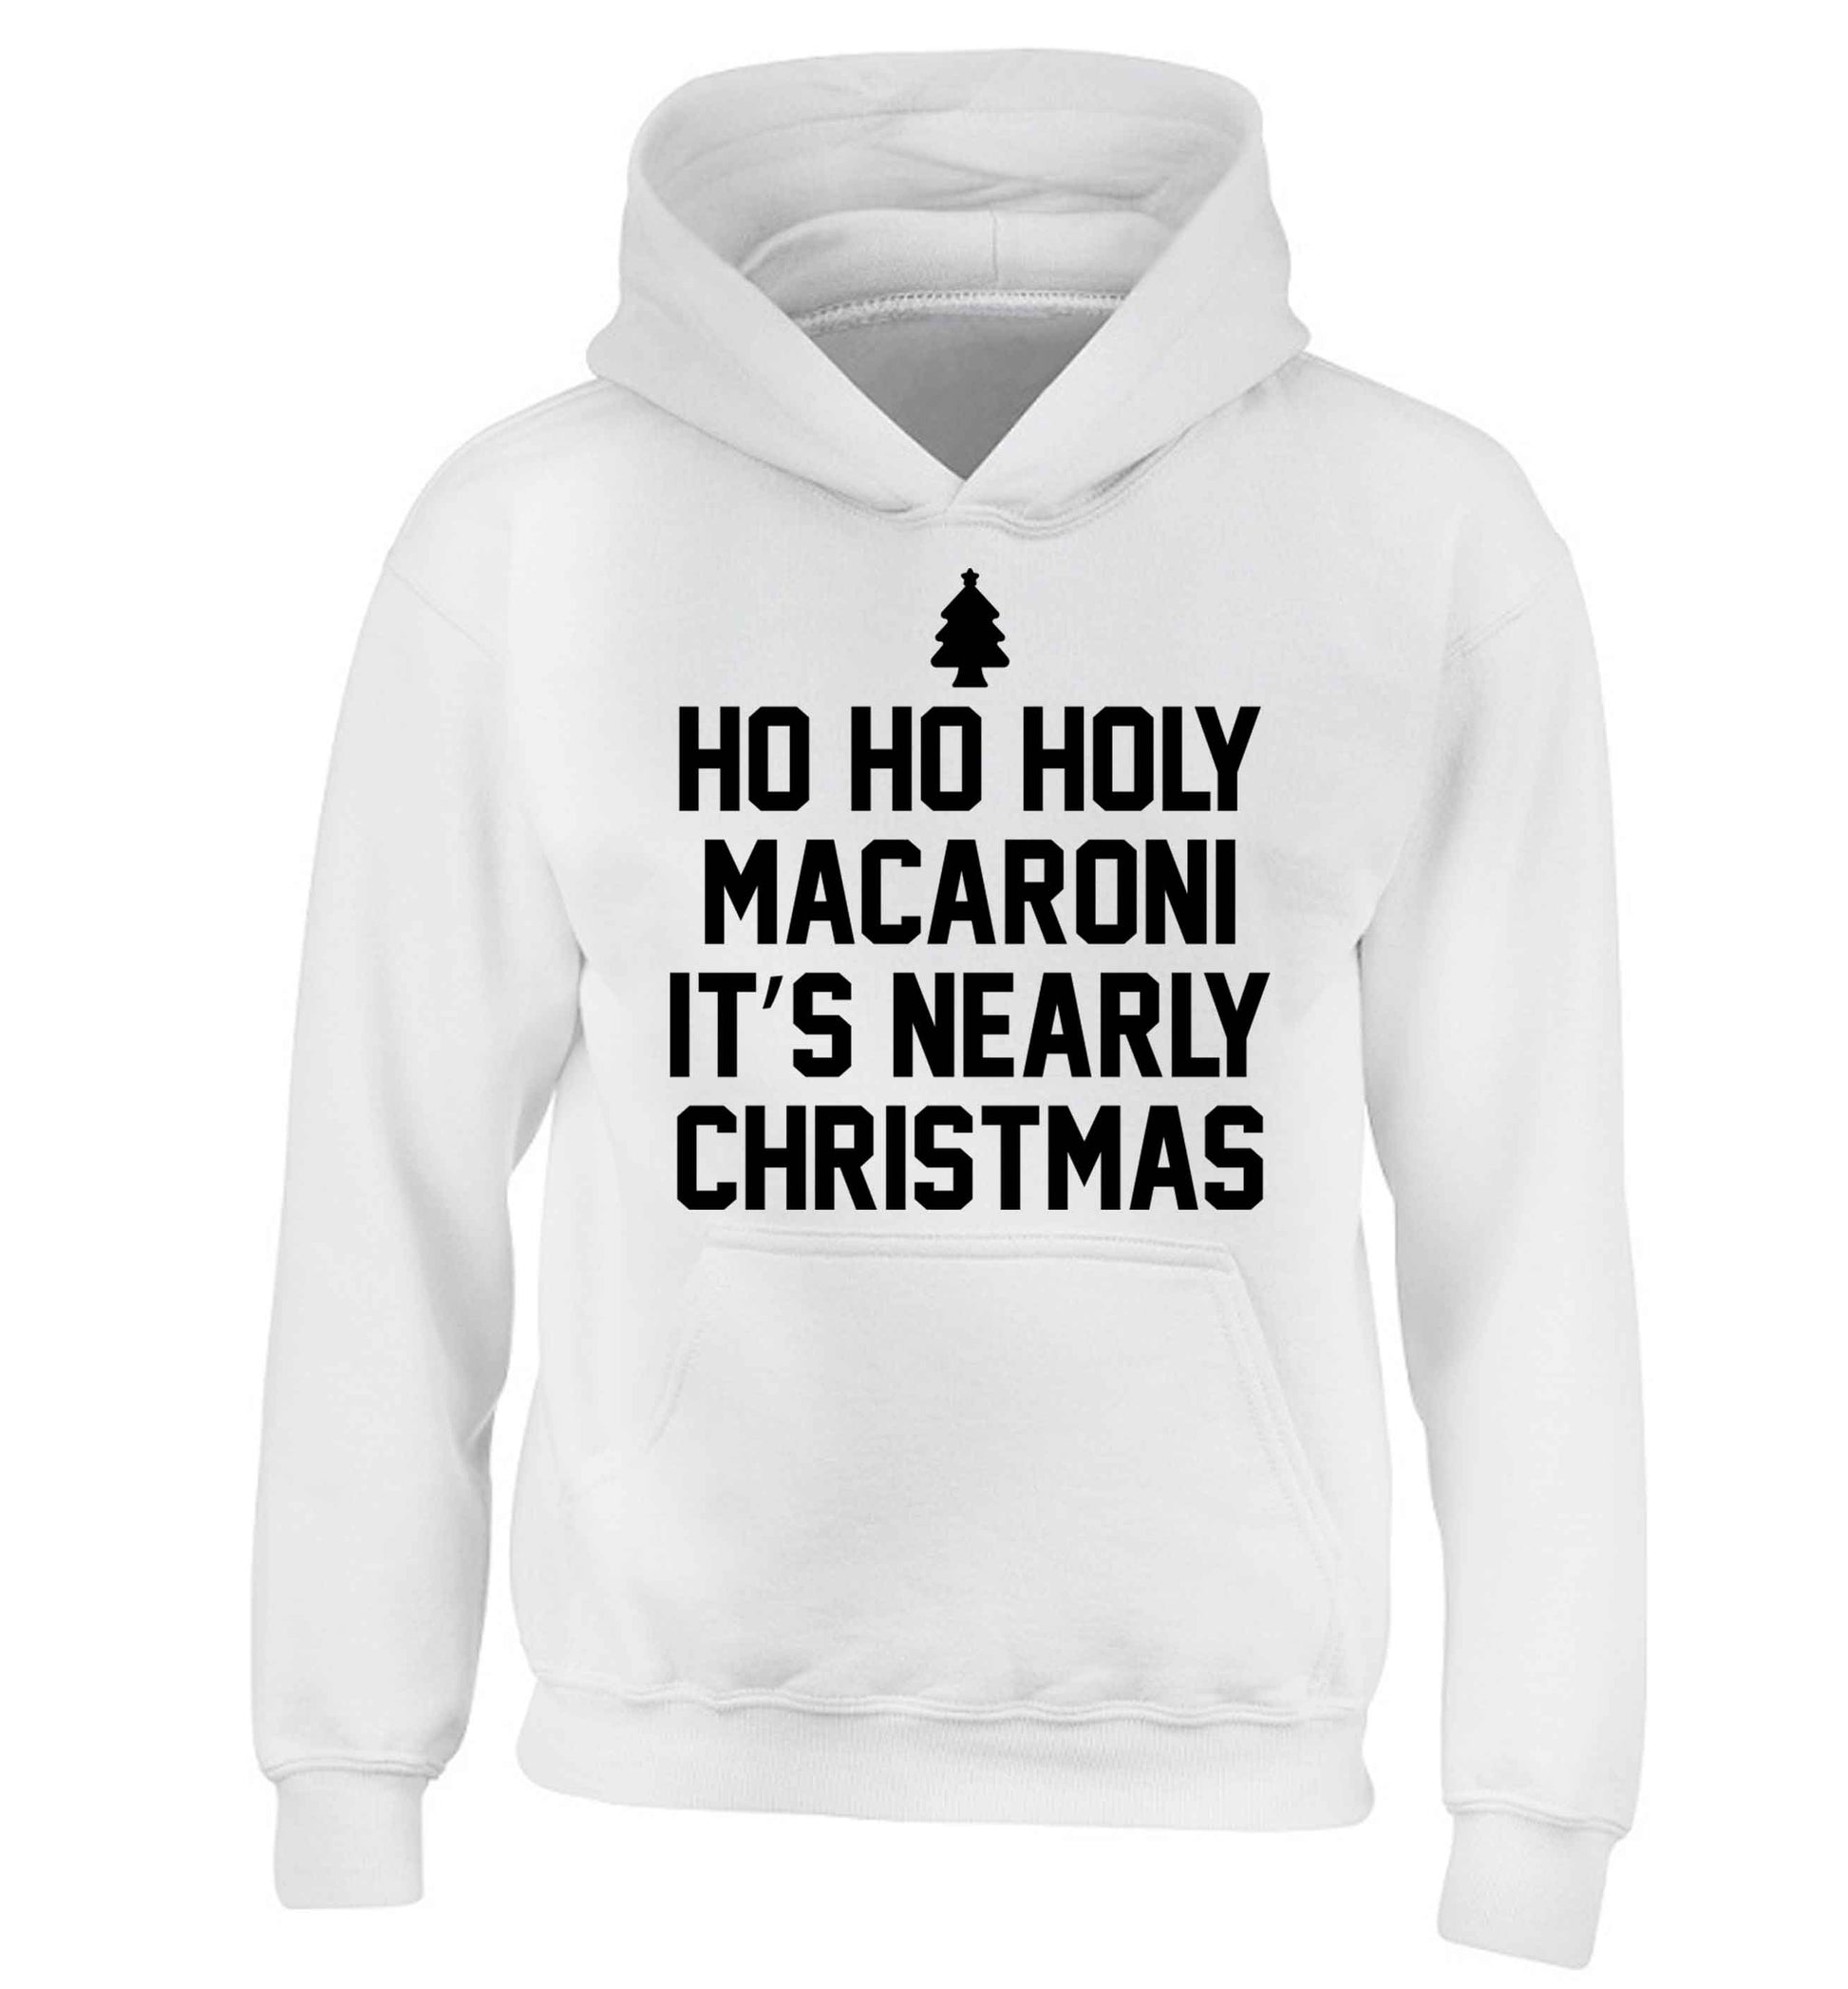 Ho ho holy macaroni it's nearly Christmas children's white hoodie 12-13 Years